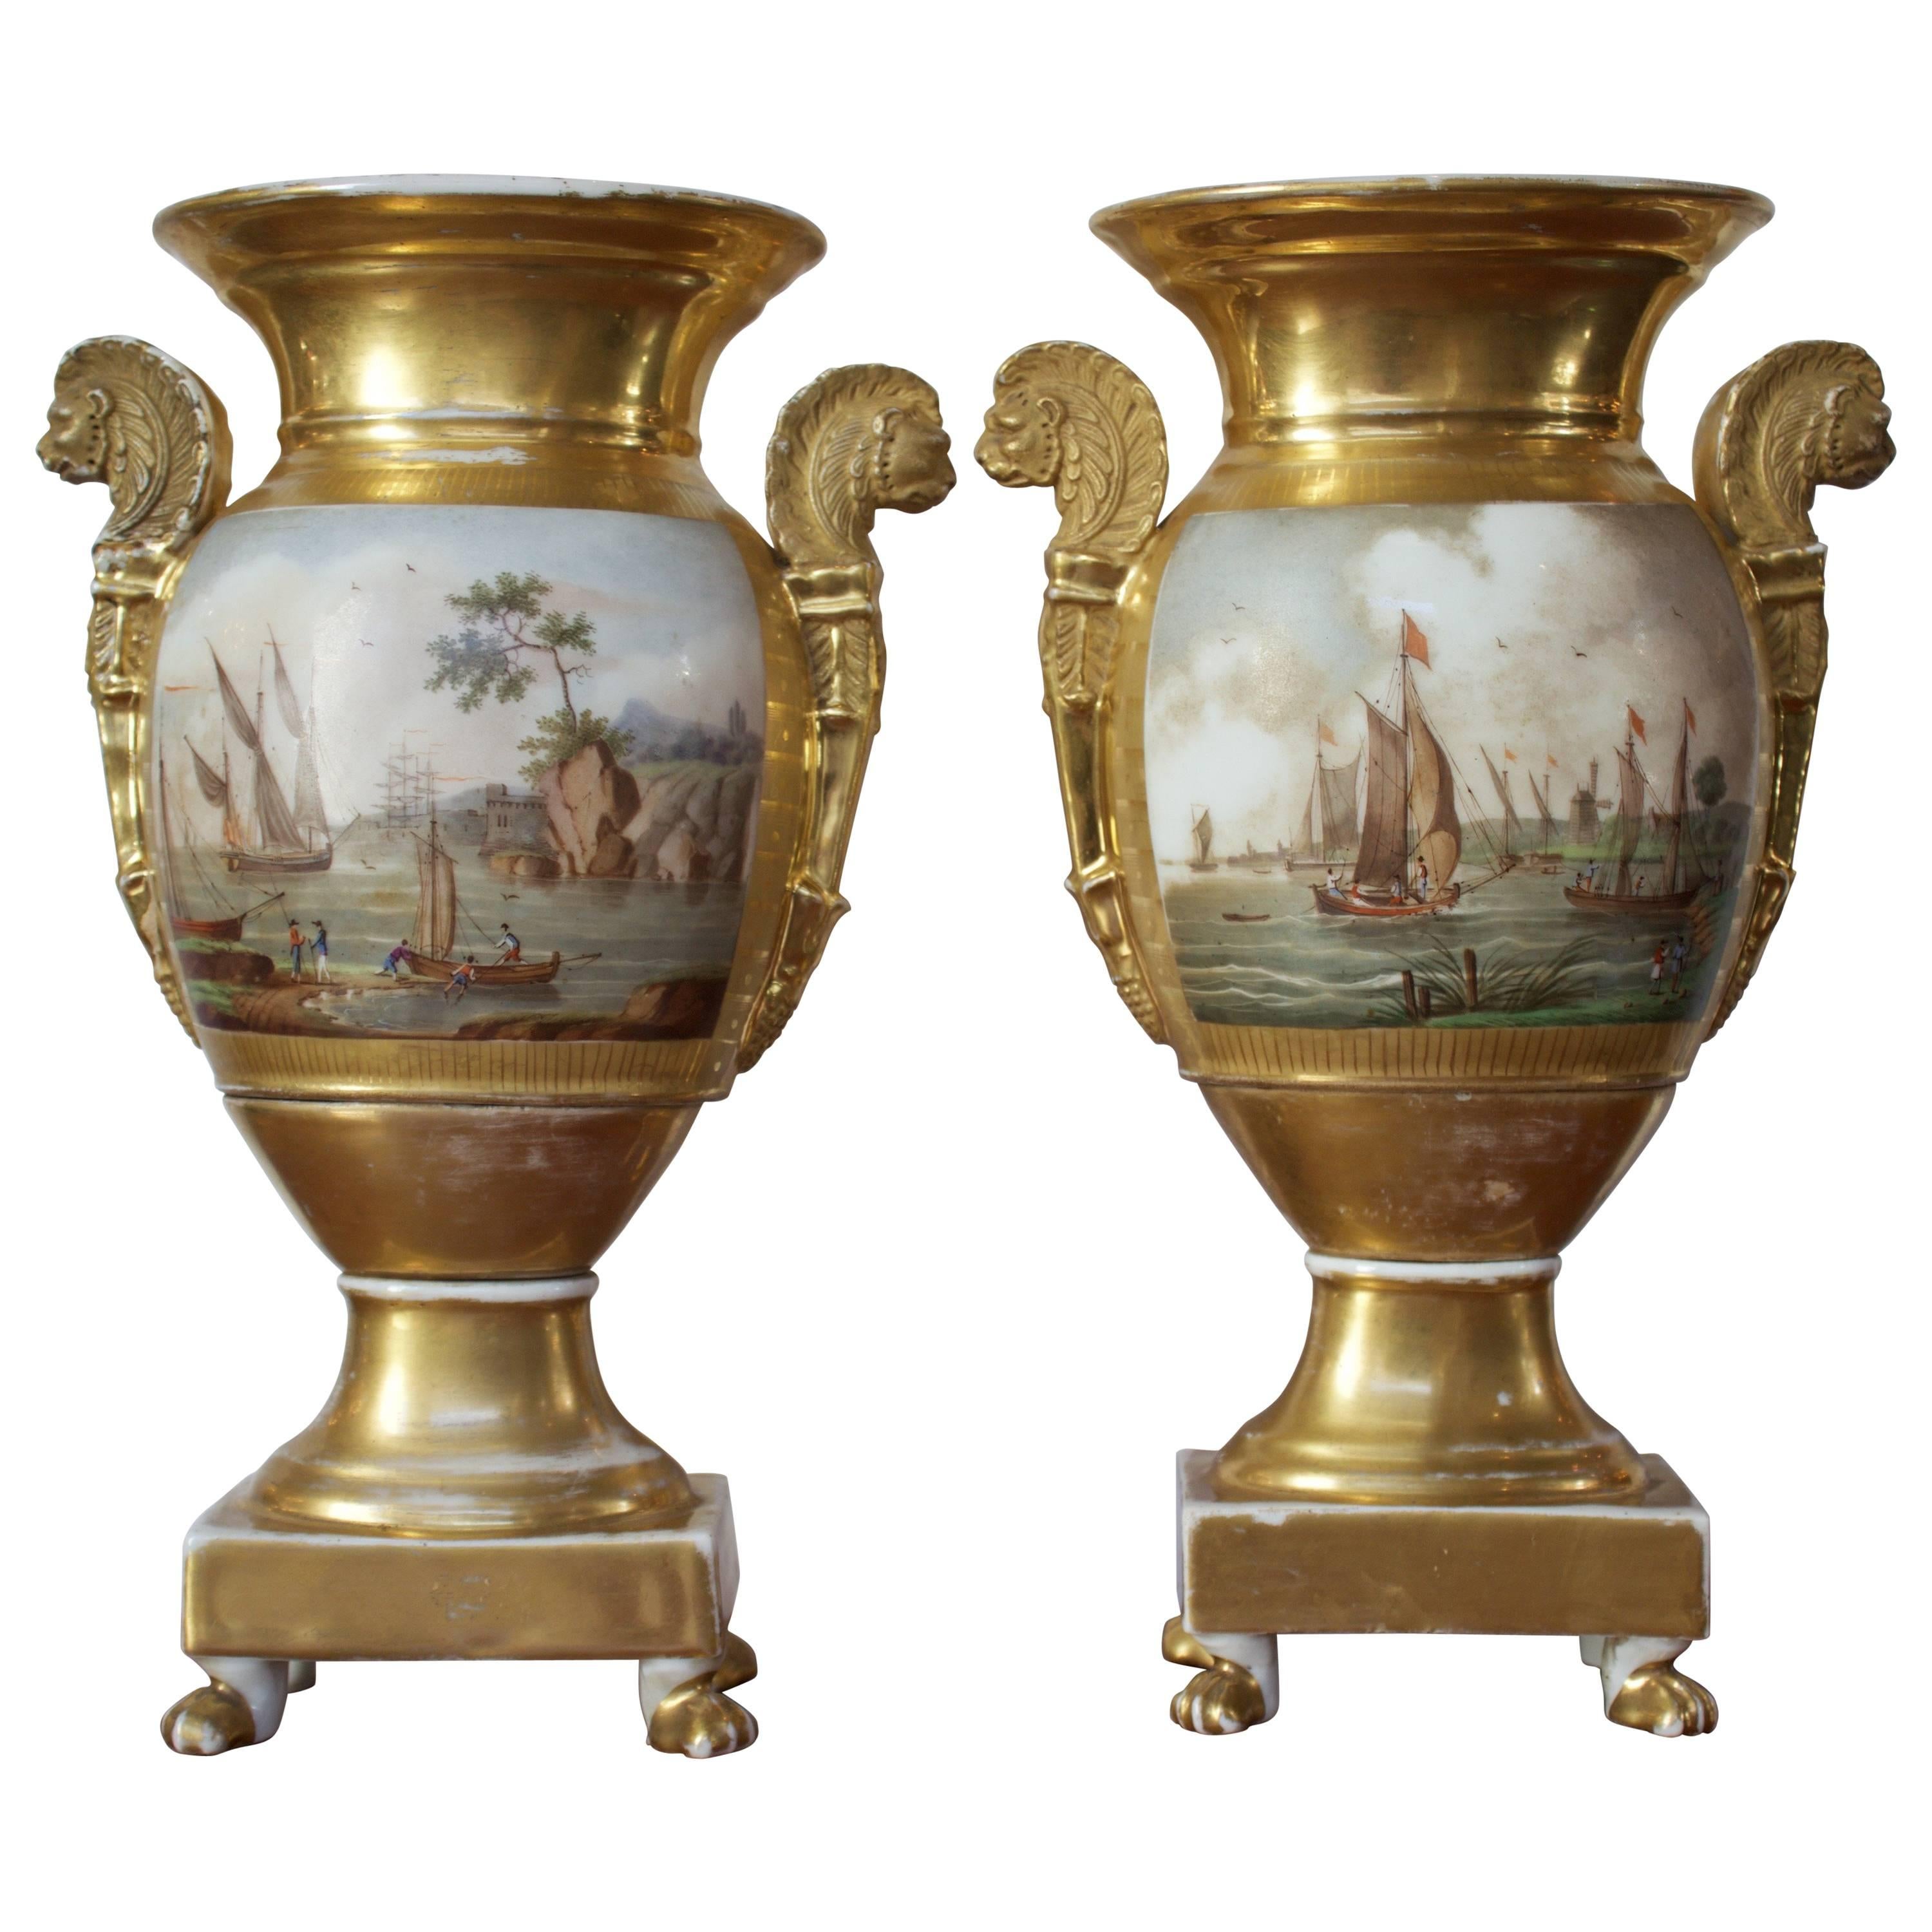 Pair of Empire Period Porcelain Vases with Maritime Scene